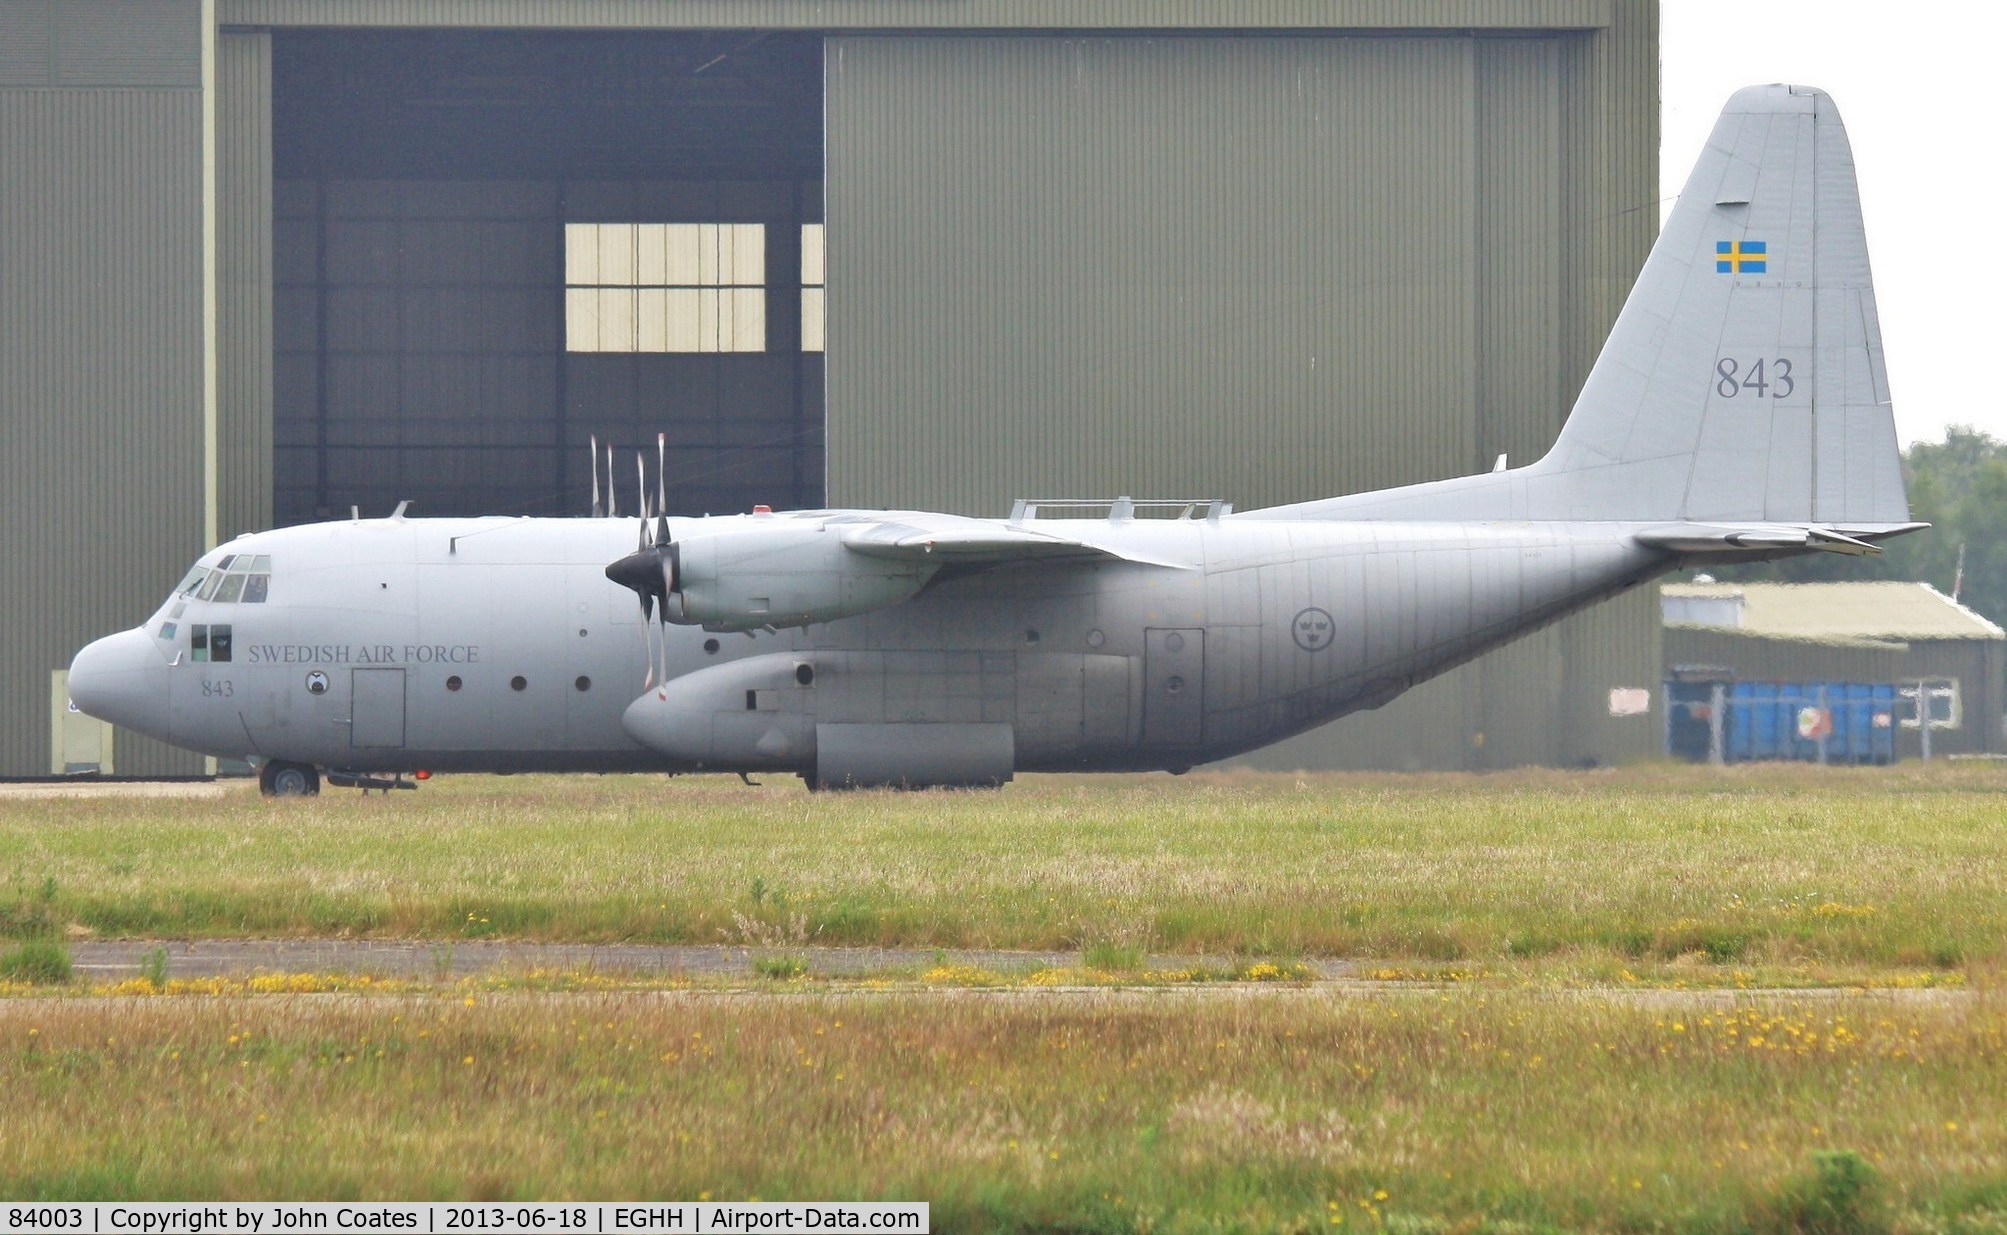 84003, Lockheed C-130H Hercules C/N 382-4628, Arriving at Cobham hangar